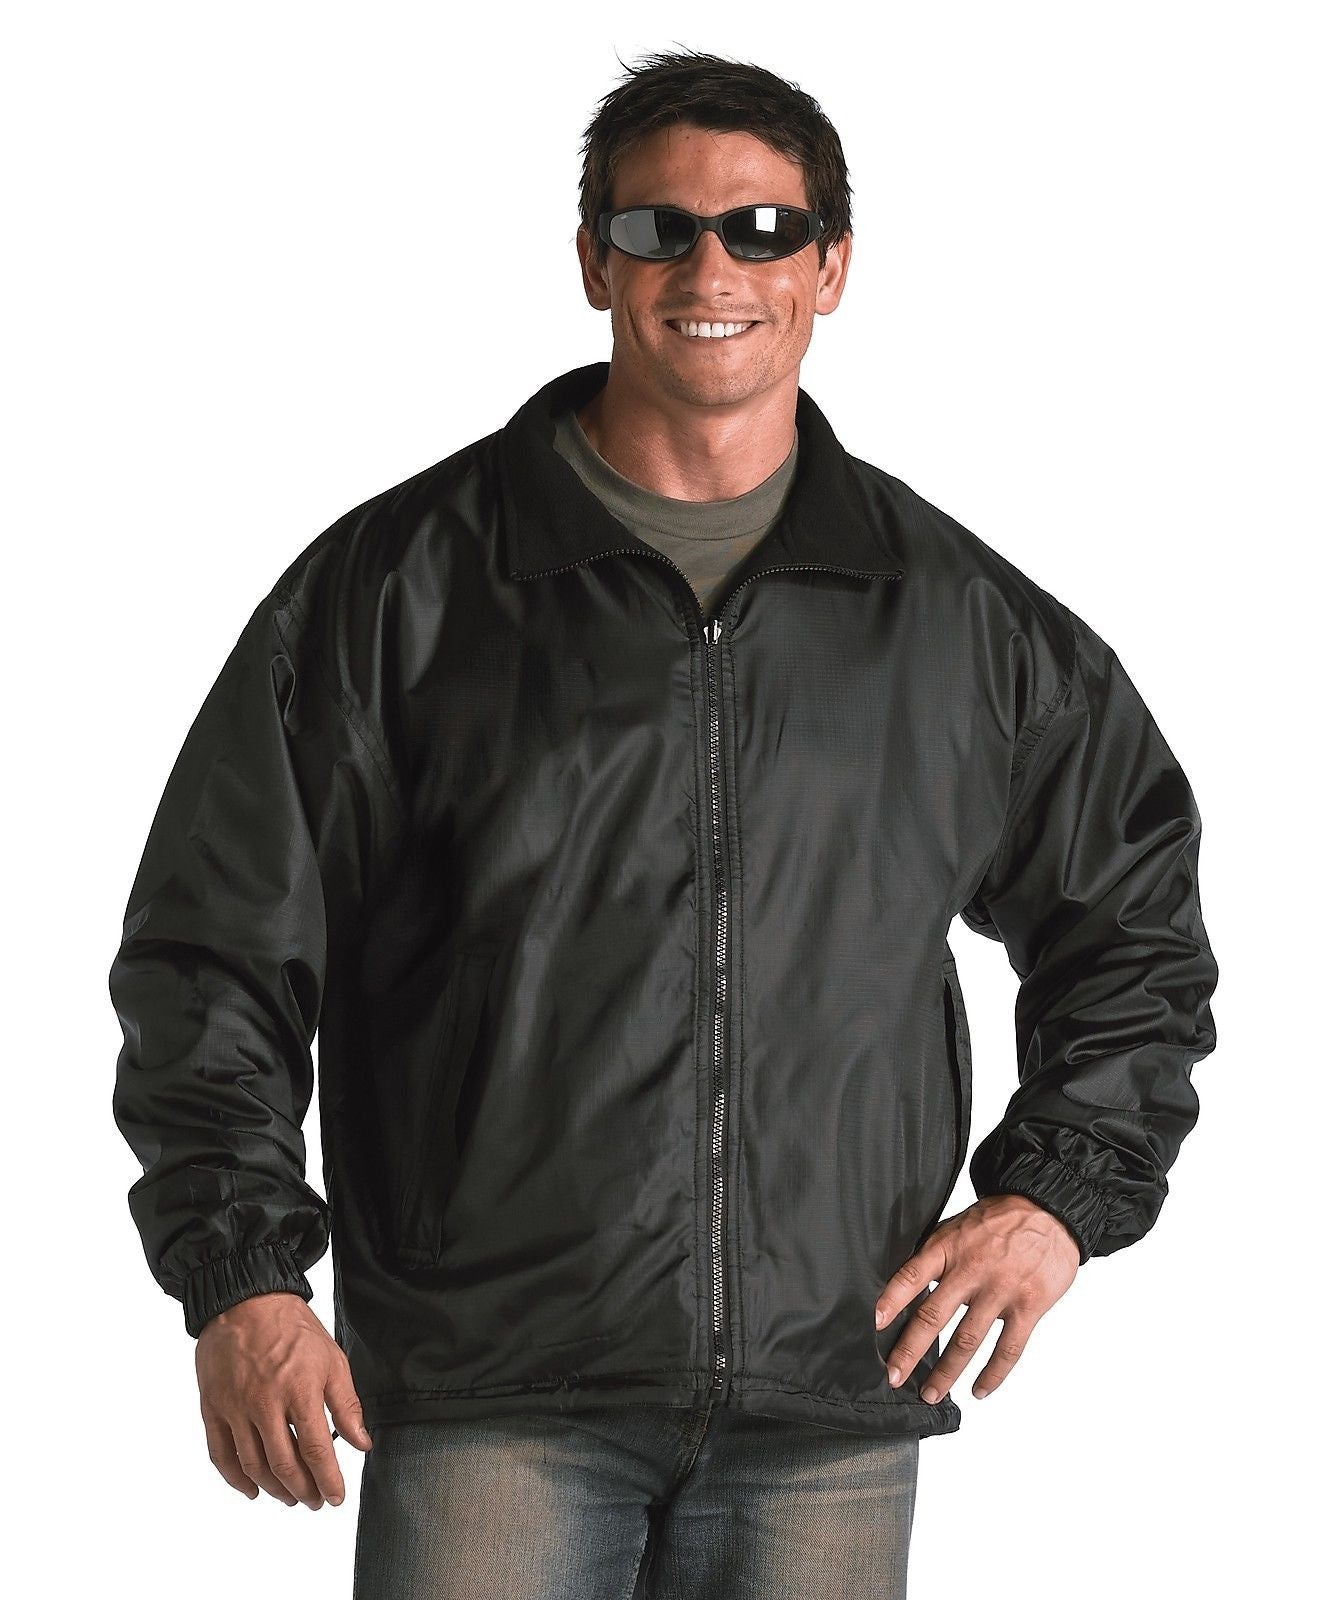 Black Fleece Lined Nylon Jacket Reversible - Waterproof Outer Shell